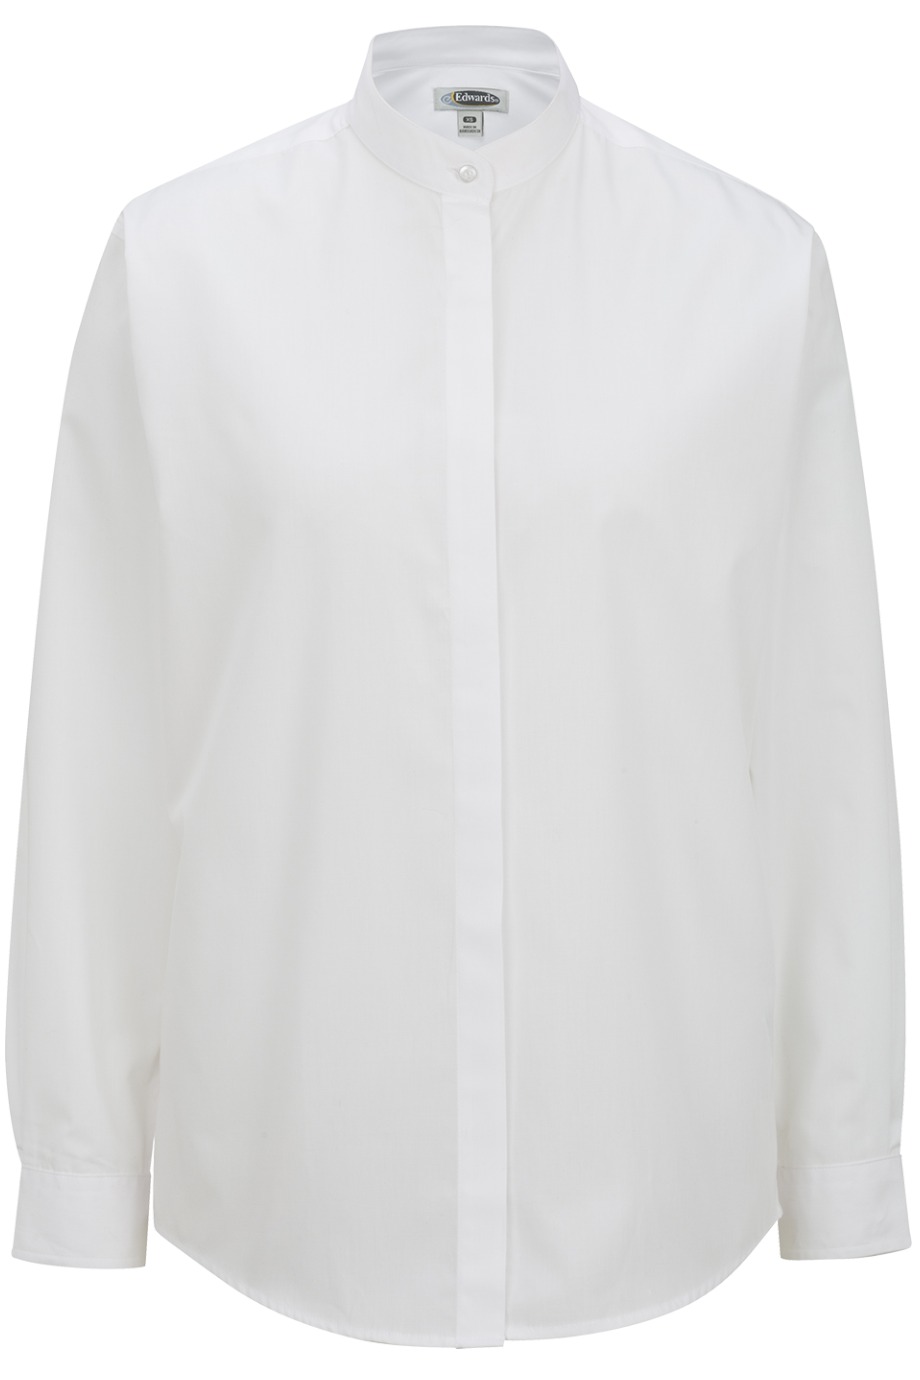 Edwards Garment 5396 - Women's Long Sleeve Banded Collar Shirt